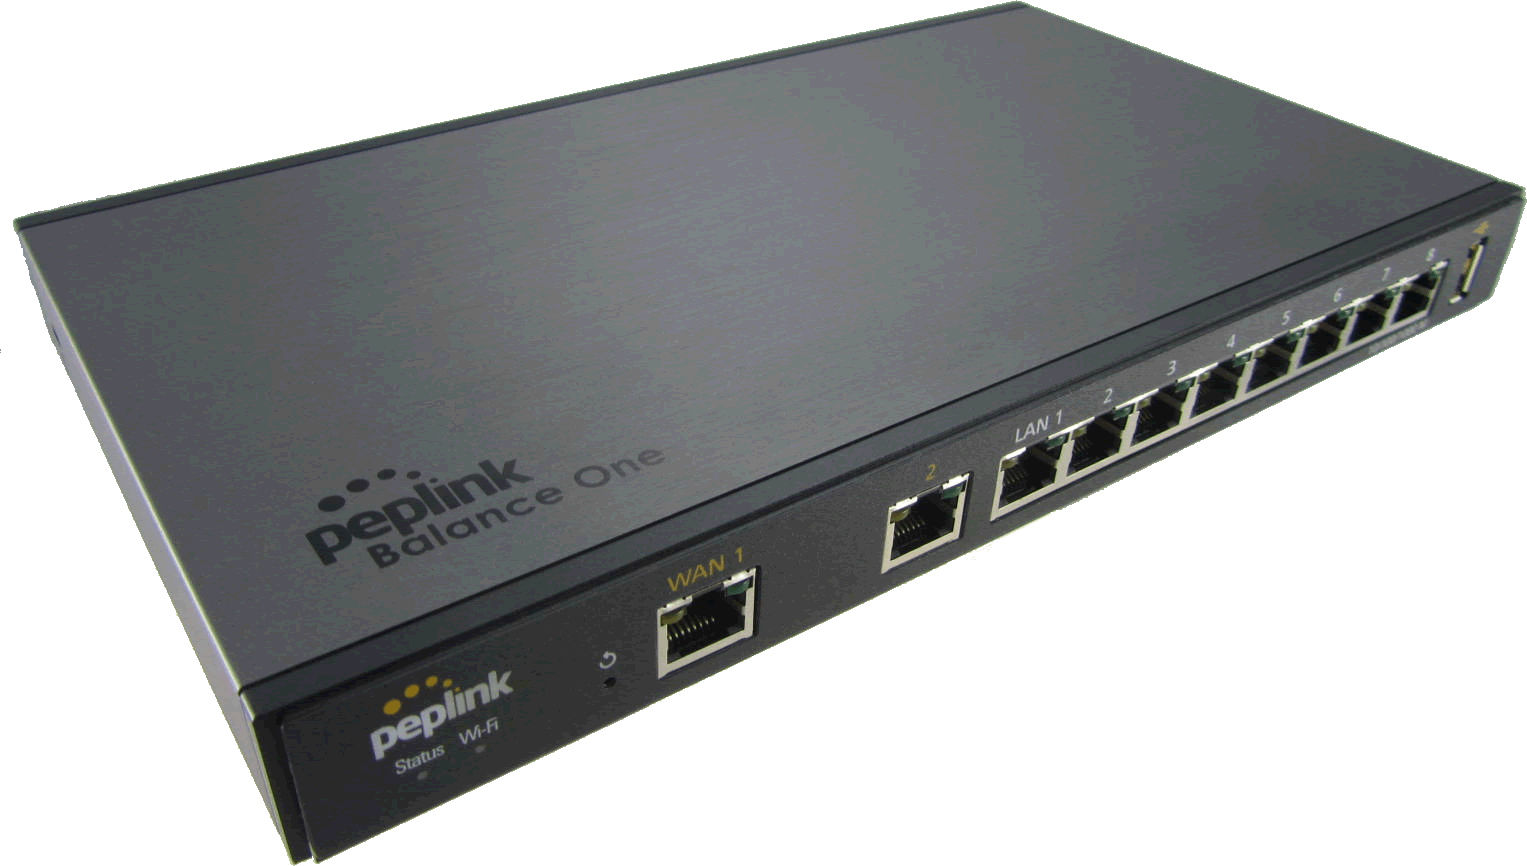  Routeurs Firewall SdWan Multiwan 450Mb Balance OneCore : routeur firewall 5 WAN, 450Mb, 50 users